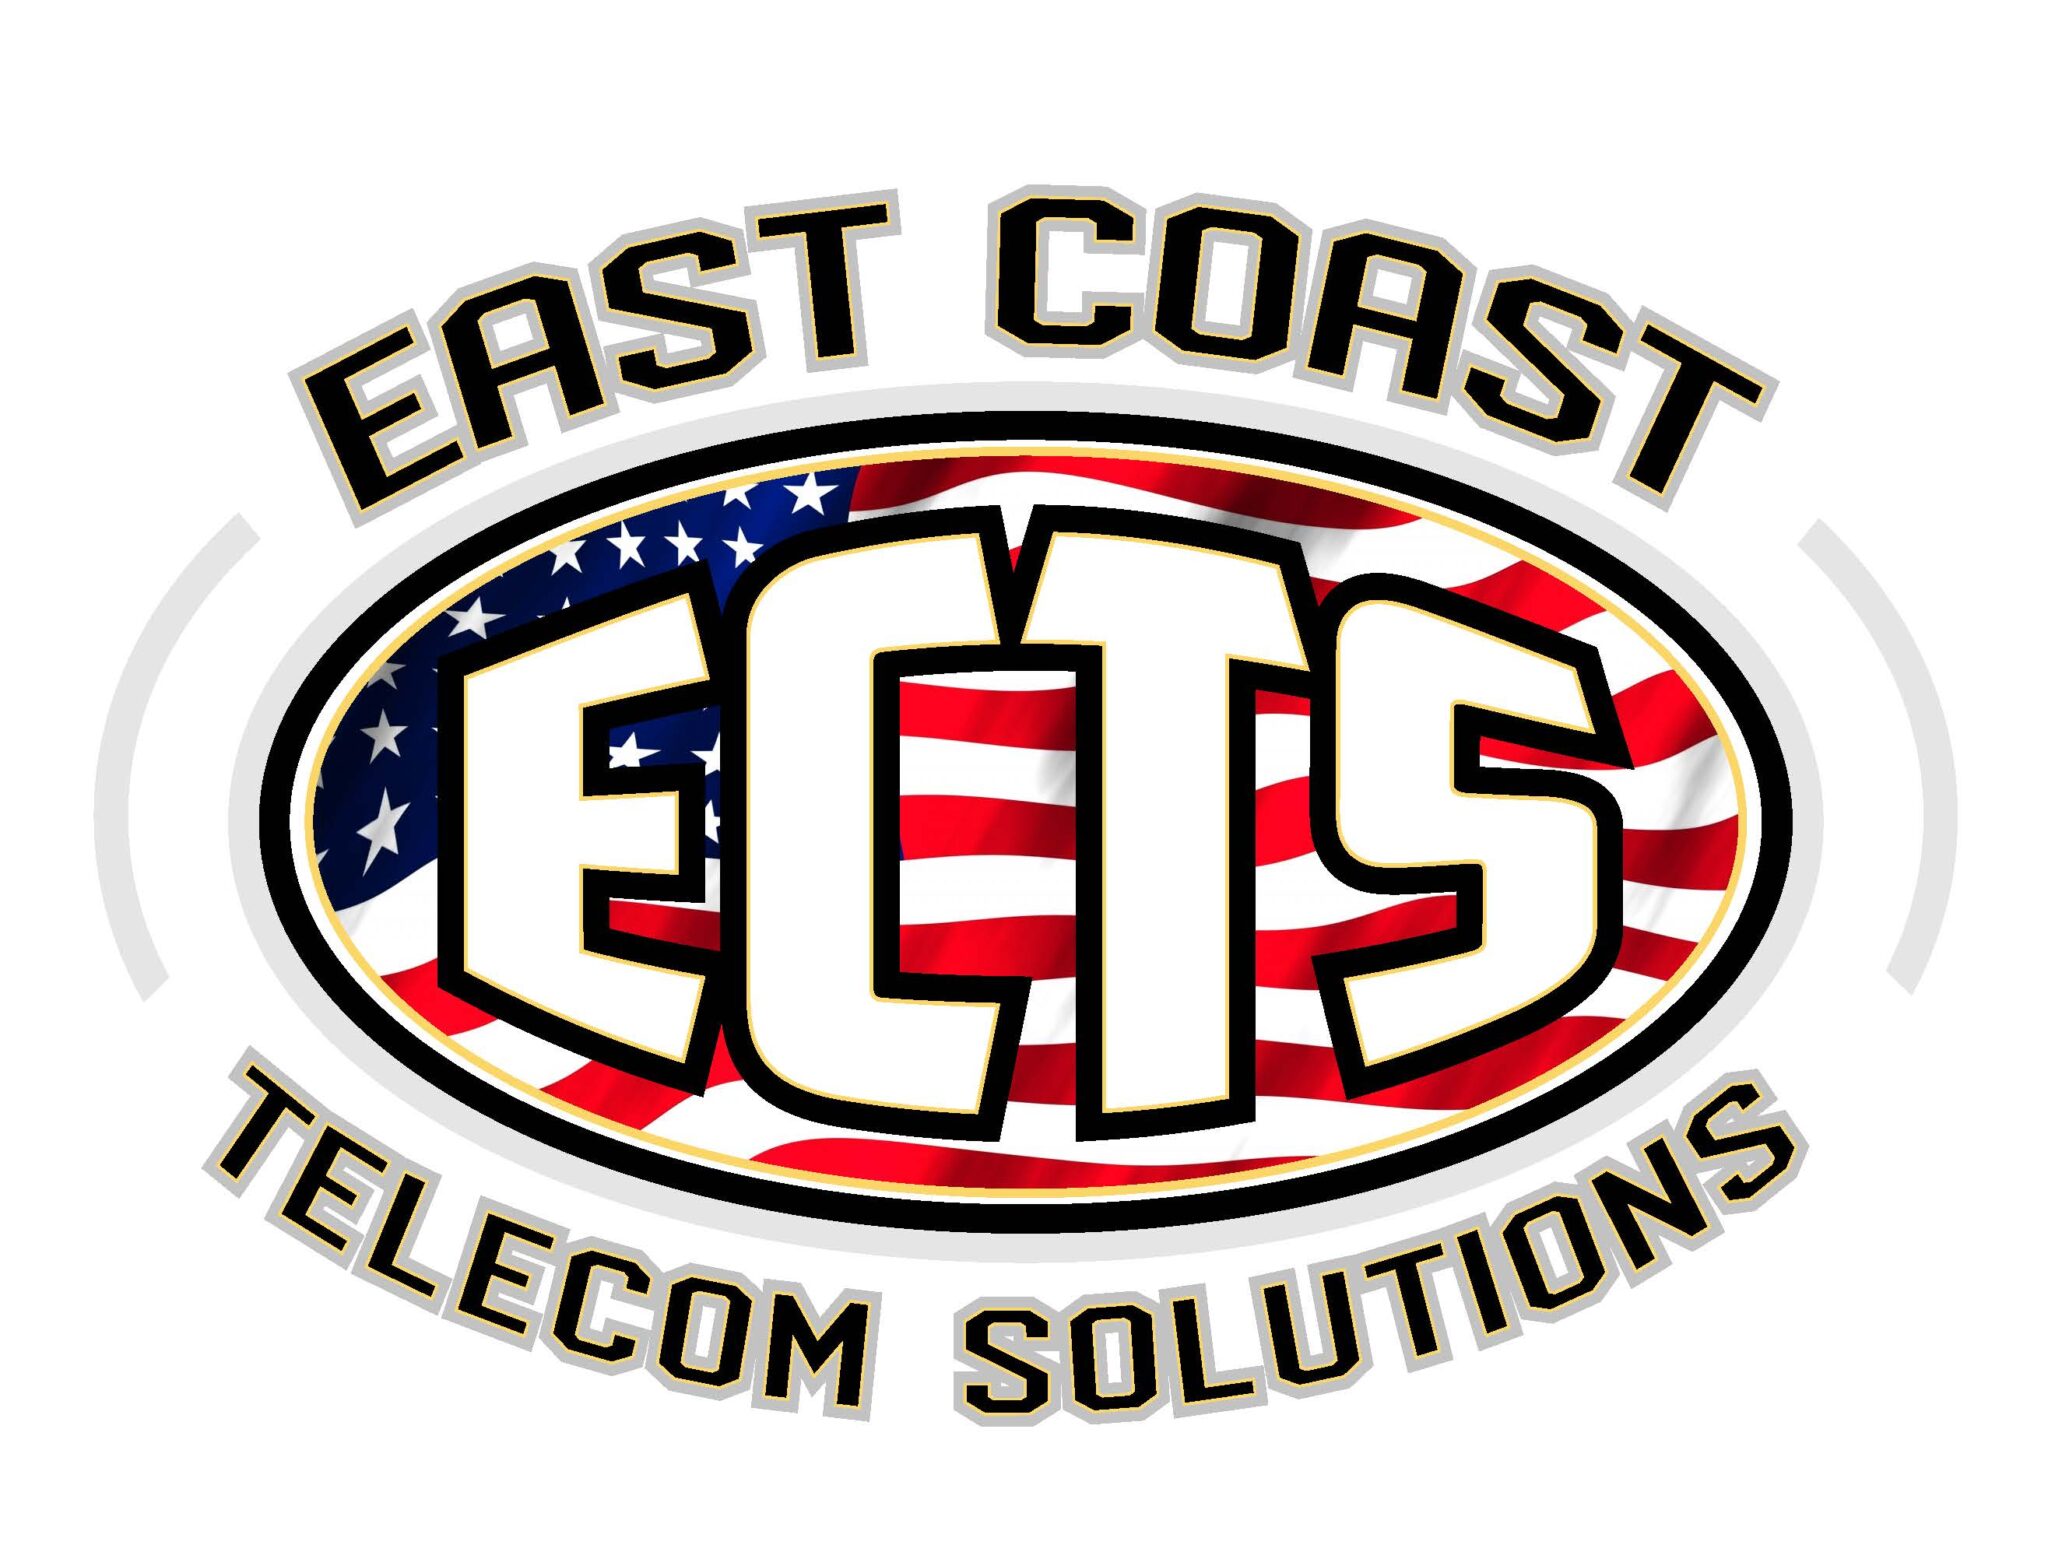 East Coast Telcom Solutions - Silver Sponsor